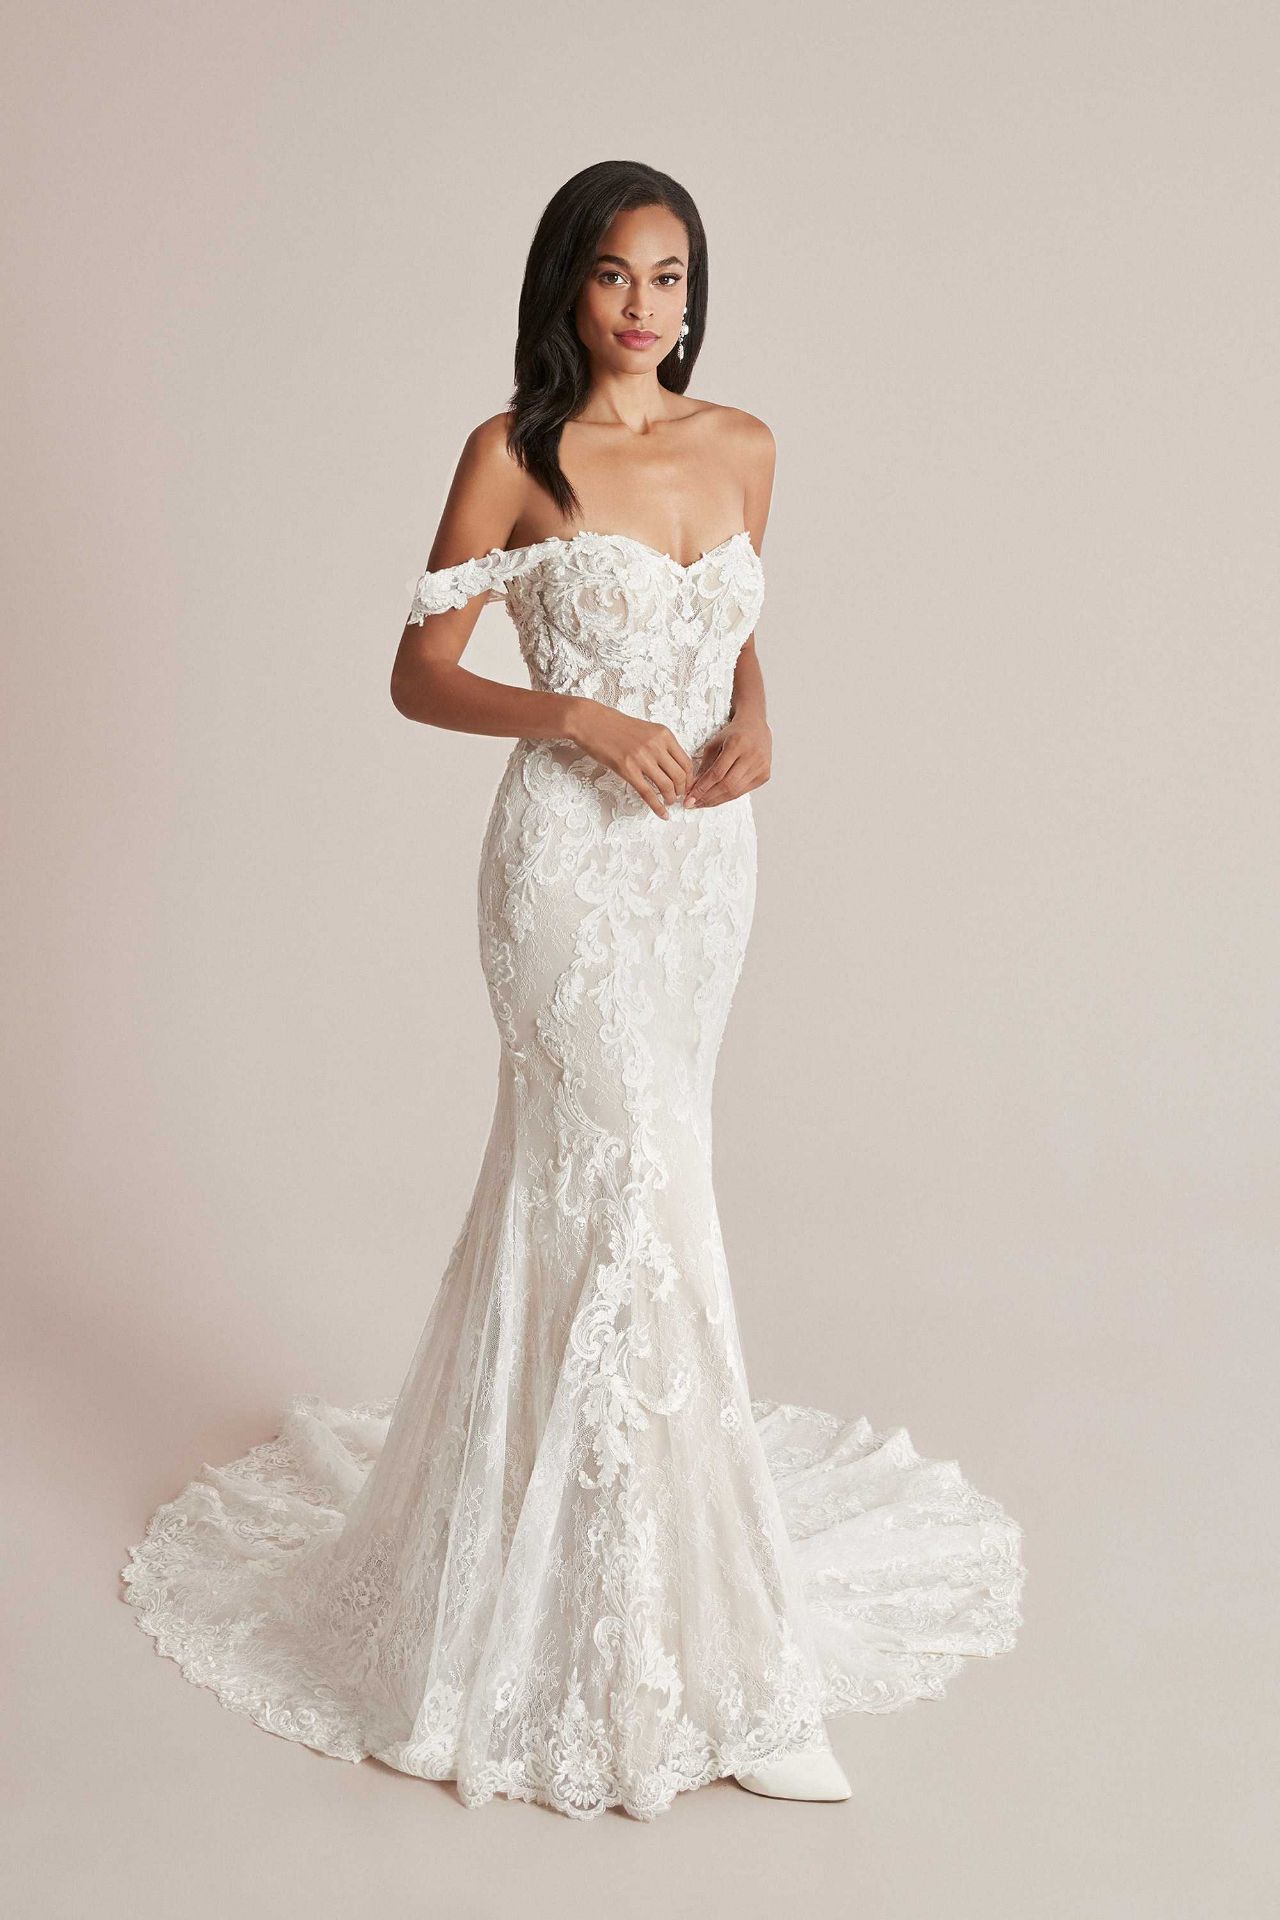 1 x Justin Alexander 'Caela' Off-The-Shoulder Lace Fit Wedding Dress - UK Size 10 - RRP £1,750